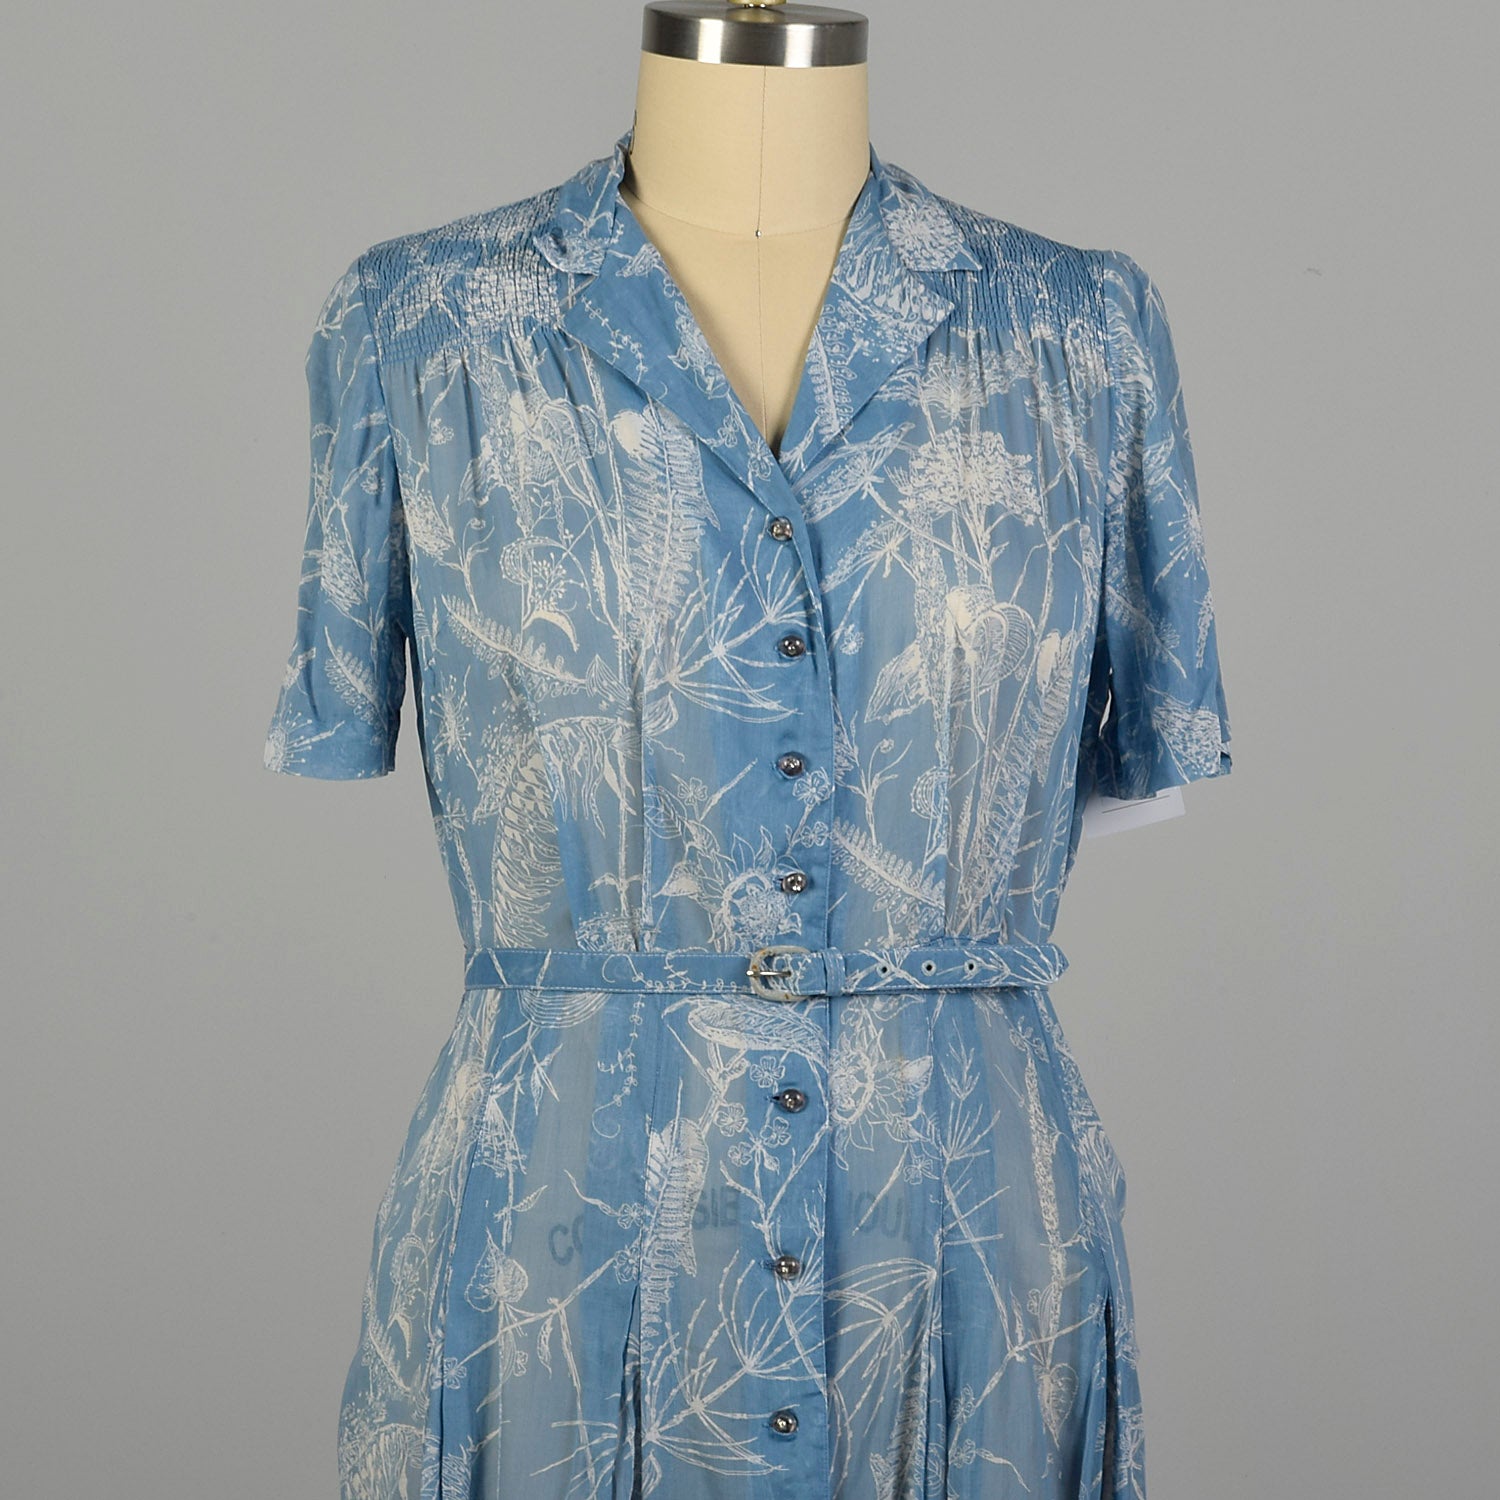 XXL 1950s Day Dress Semi-Sheer Casual Lightweight Volup Novelty Print